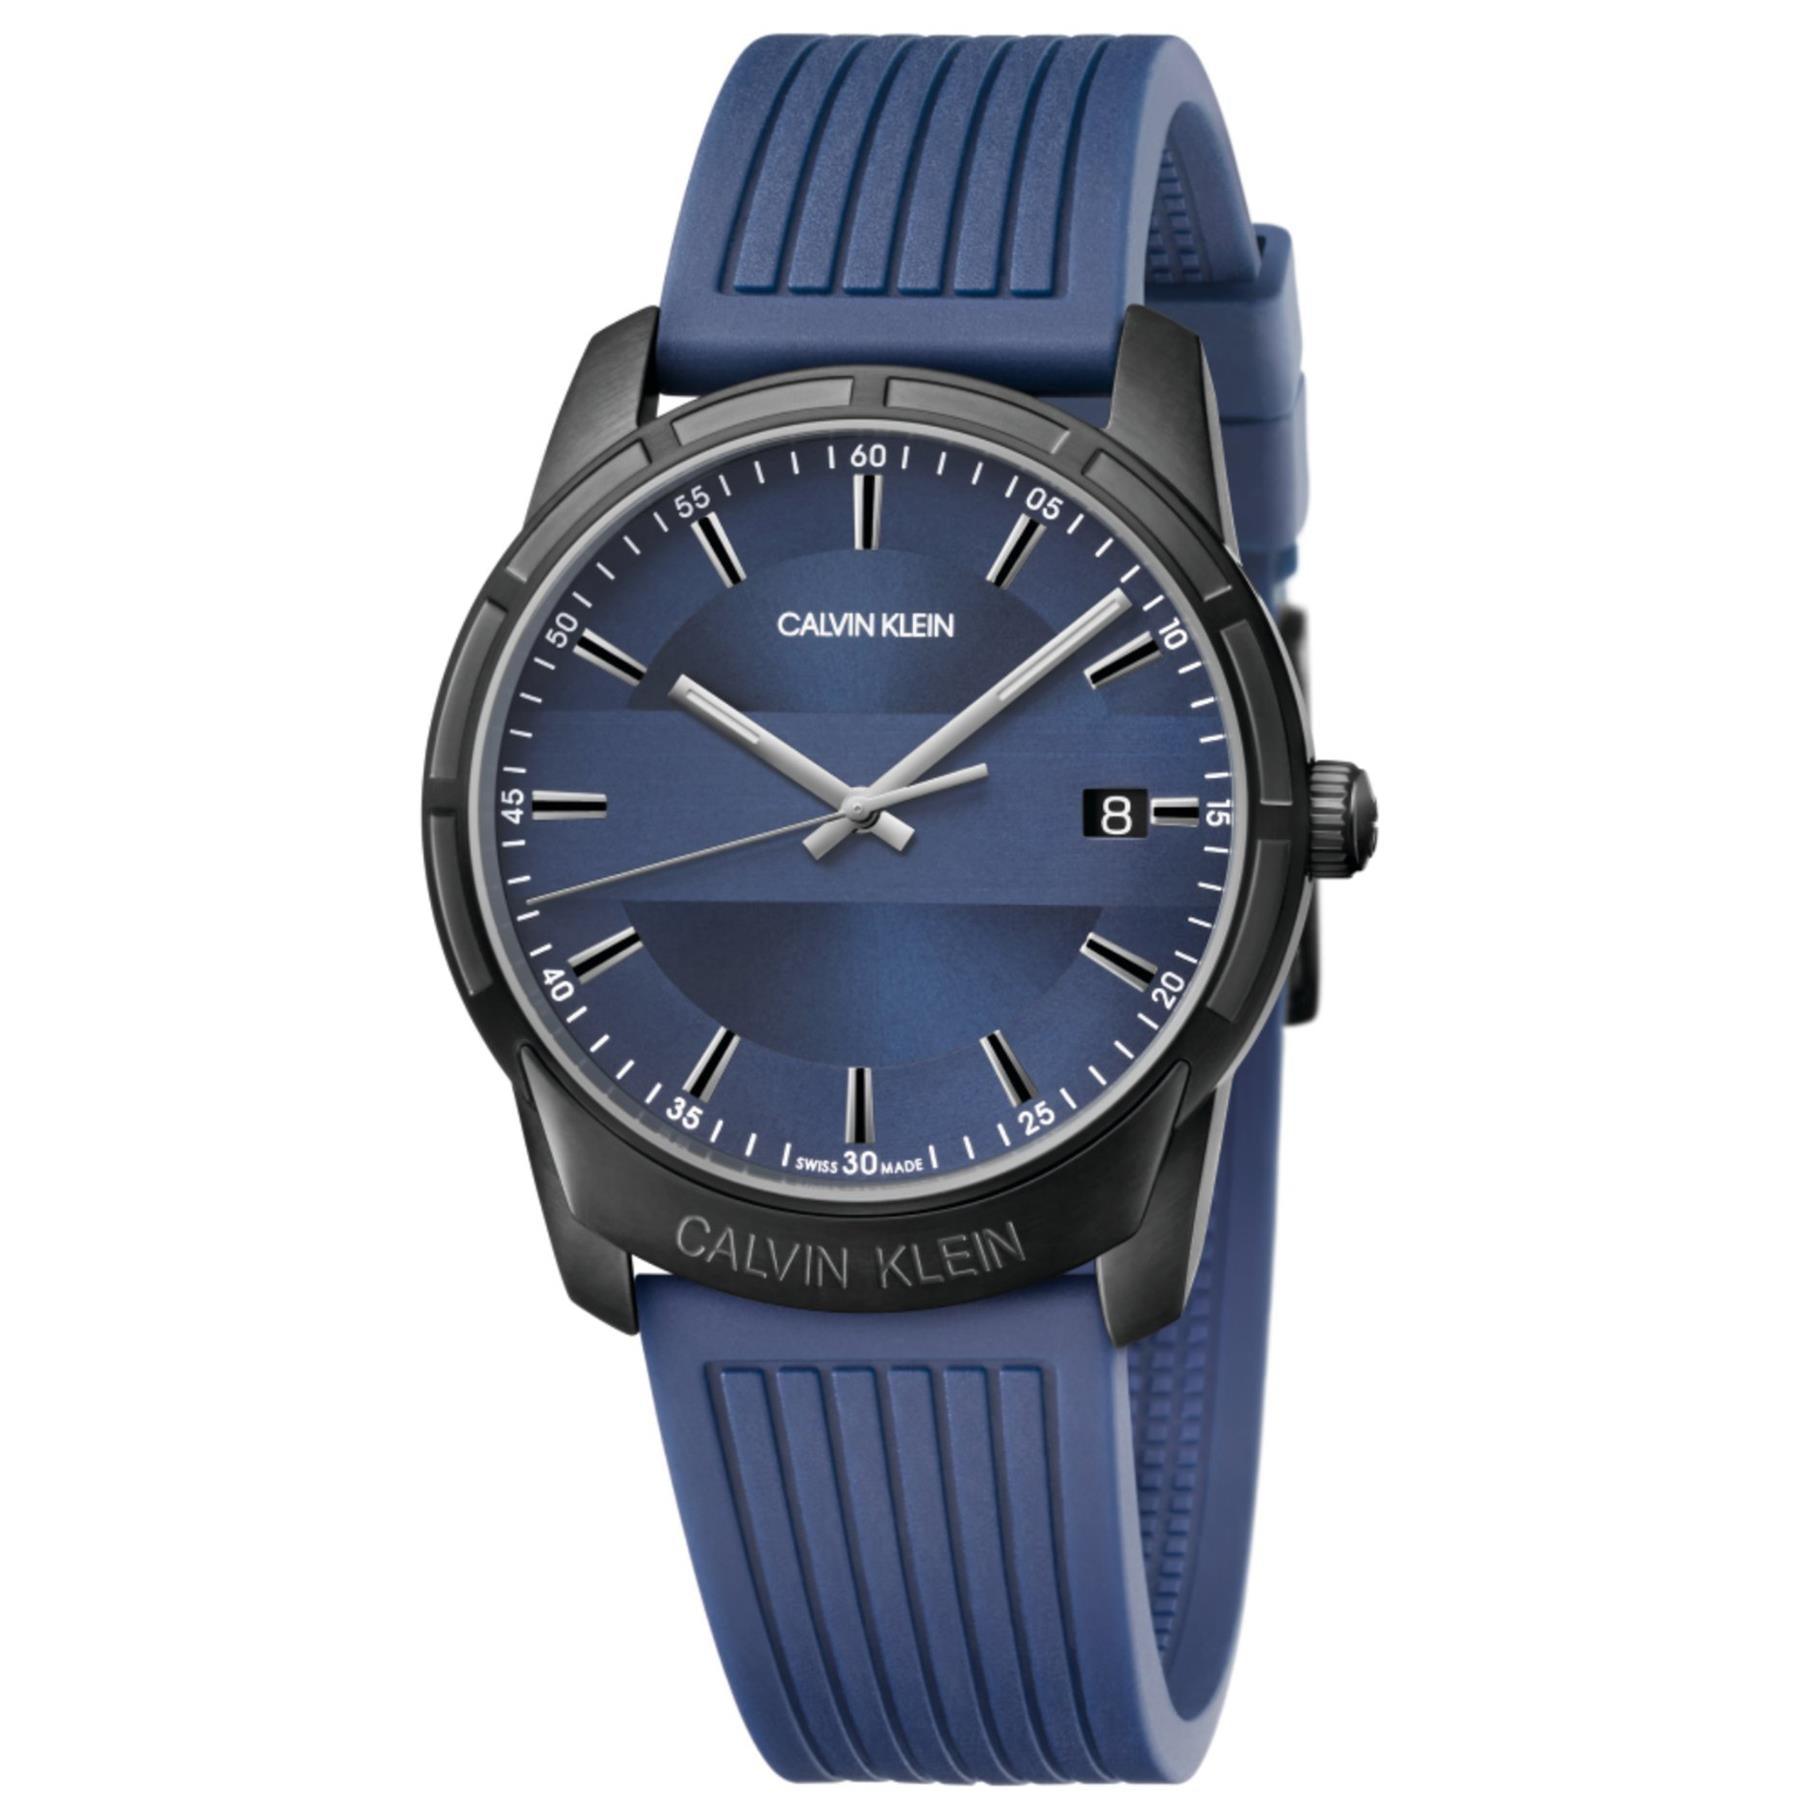 Oiritaly Armbanduhr - Quarz - Unisex - Calvin Klein - K5C21UM6 - Uhren